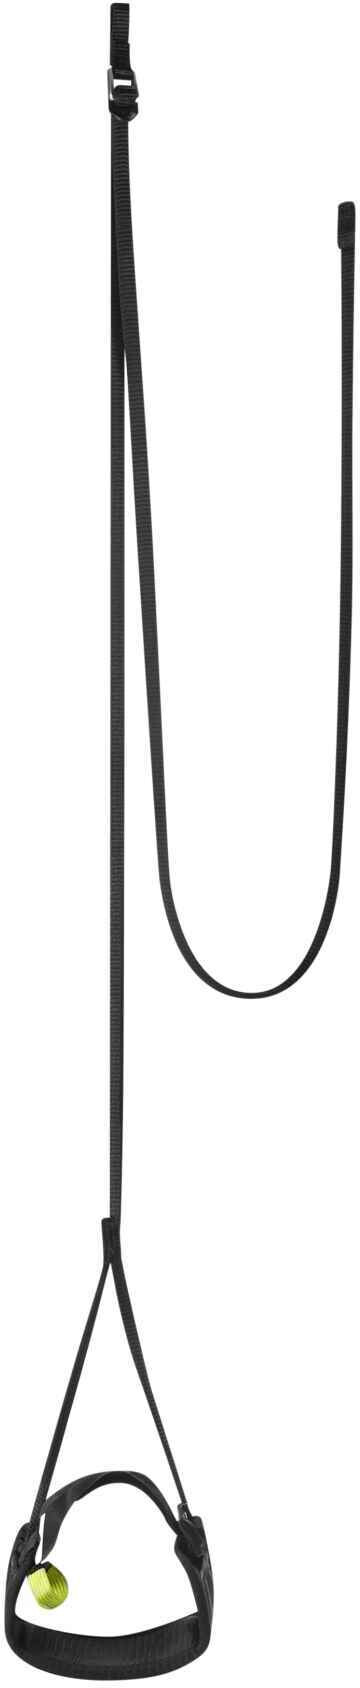 EdelridProstep II Fußschlaufe 120cm schwarz